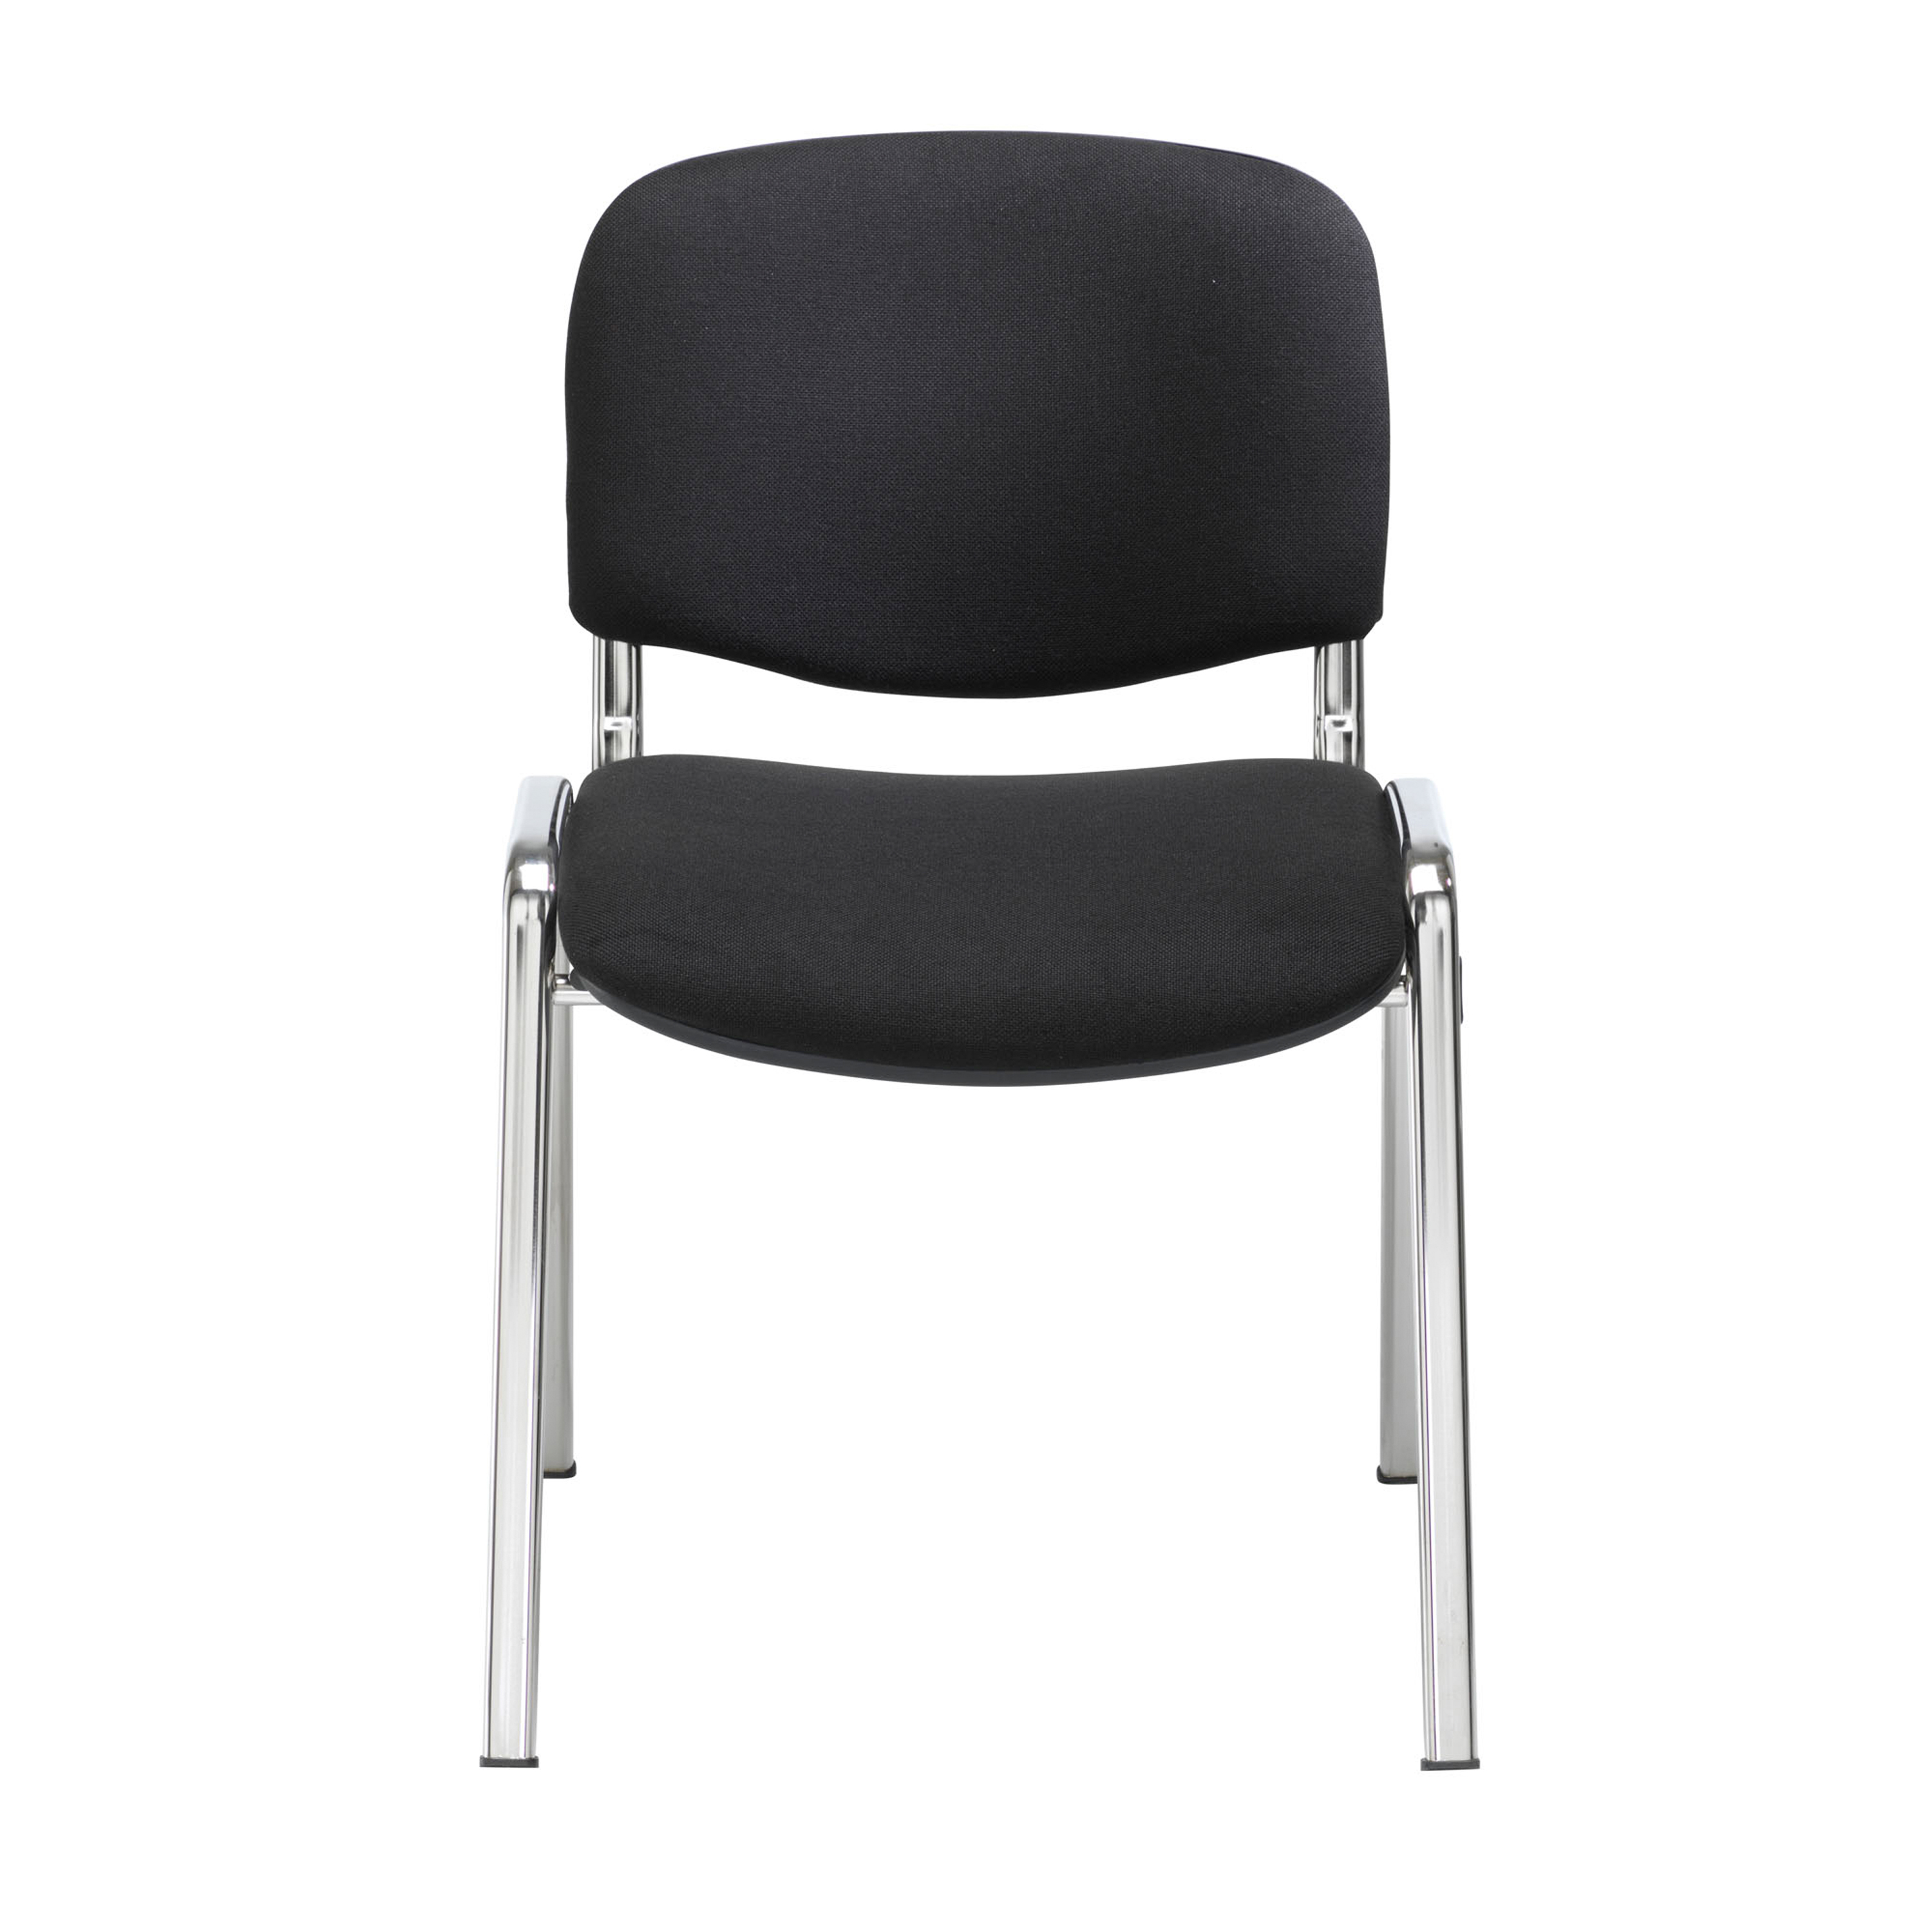 Chrome Club Meeting Room Chair - Black